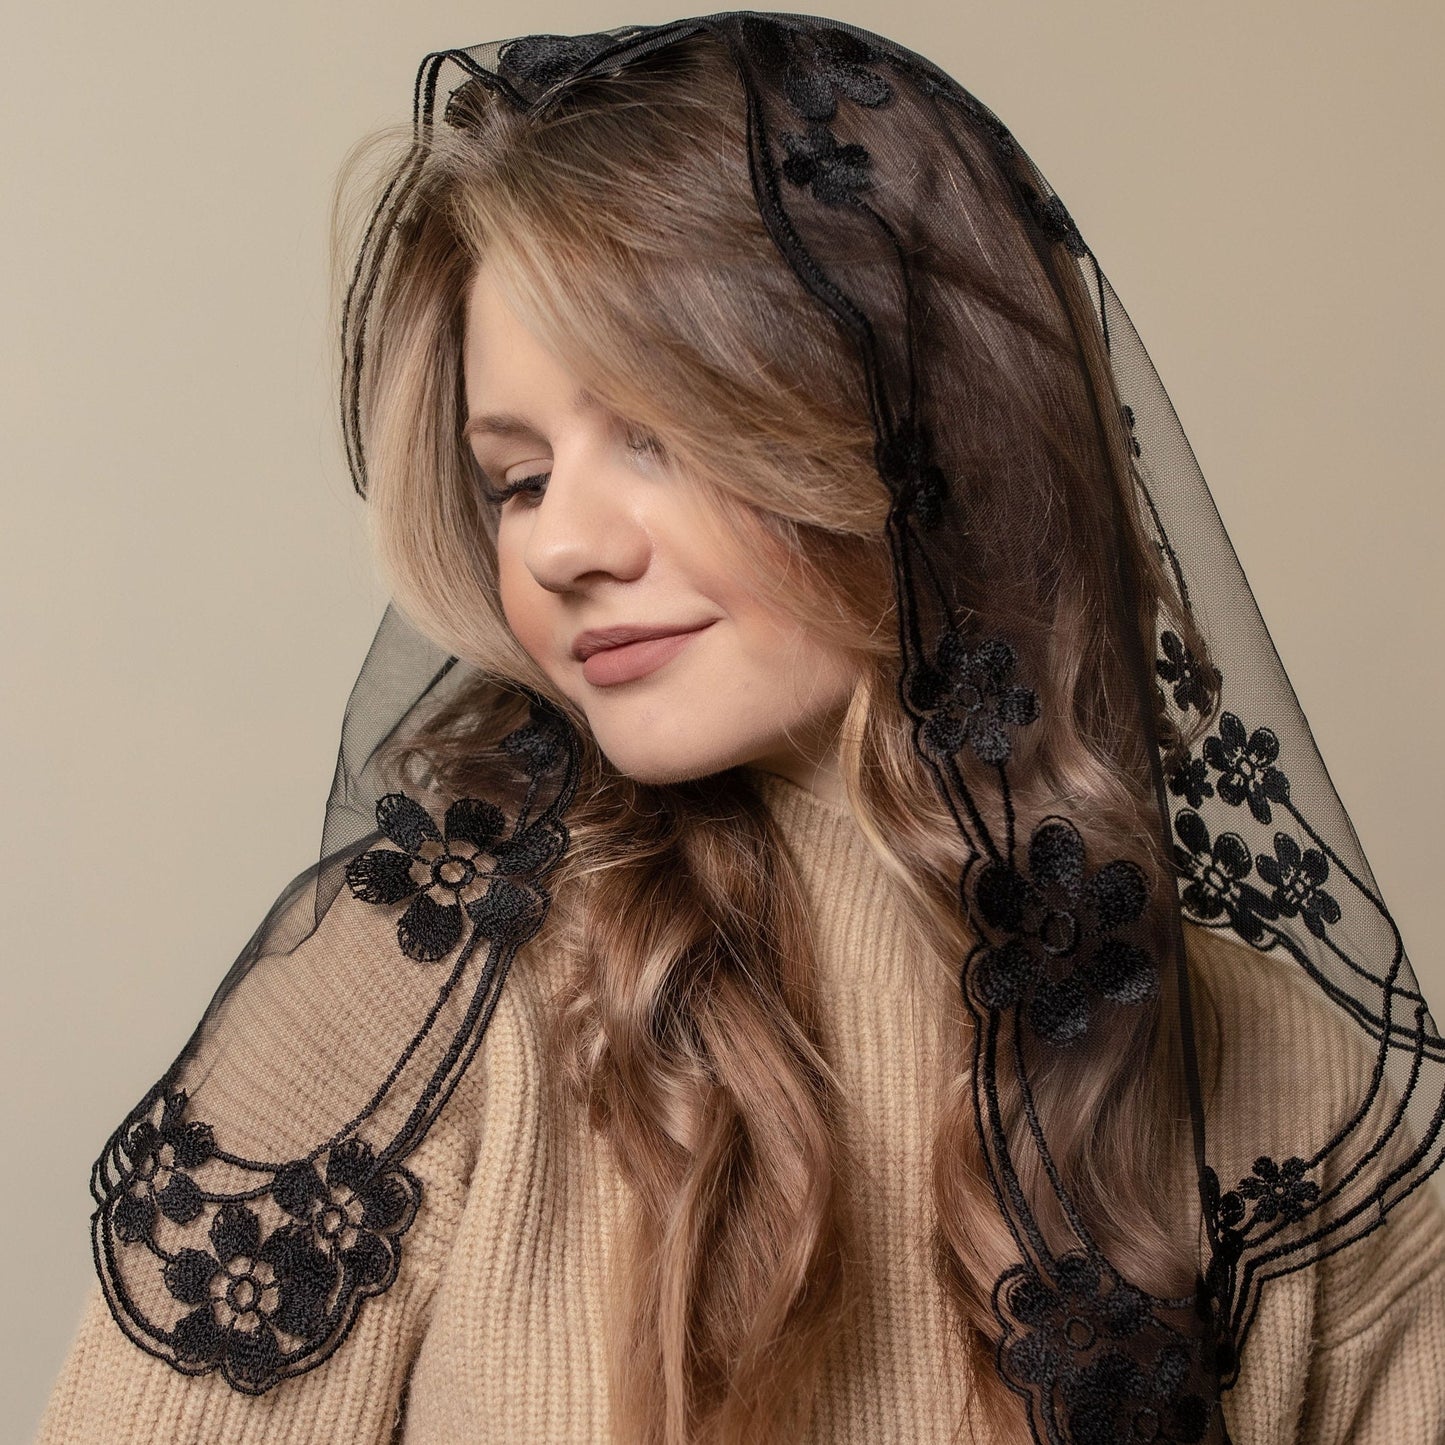 BESTSELLER veil| Black chapel veil with floral design - Maria Veils